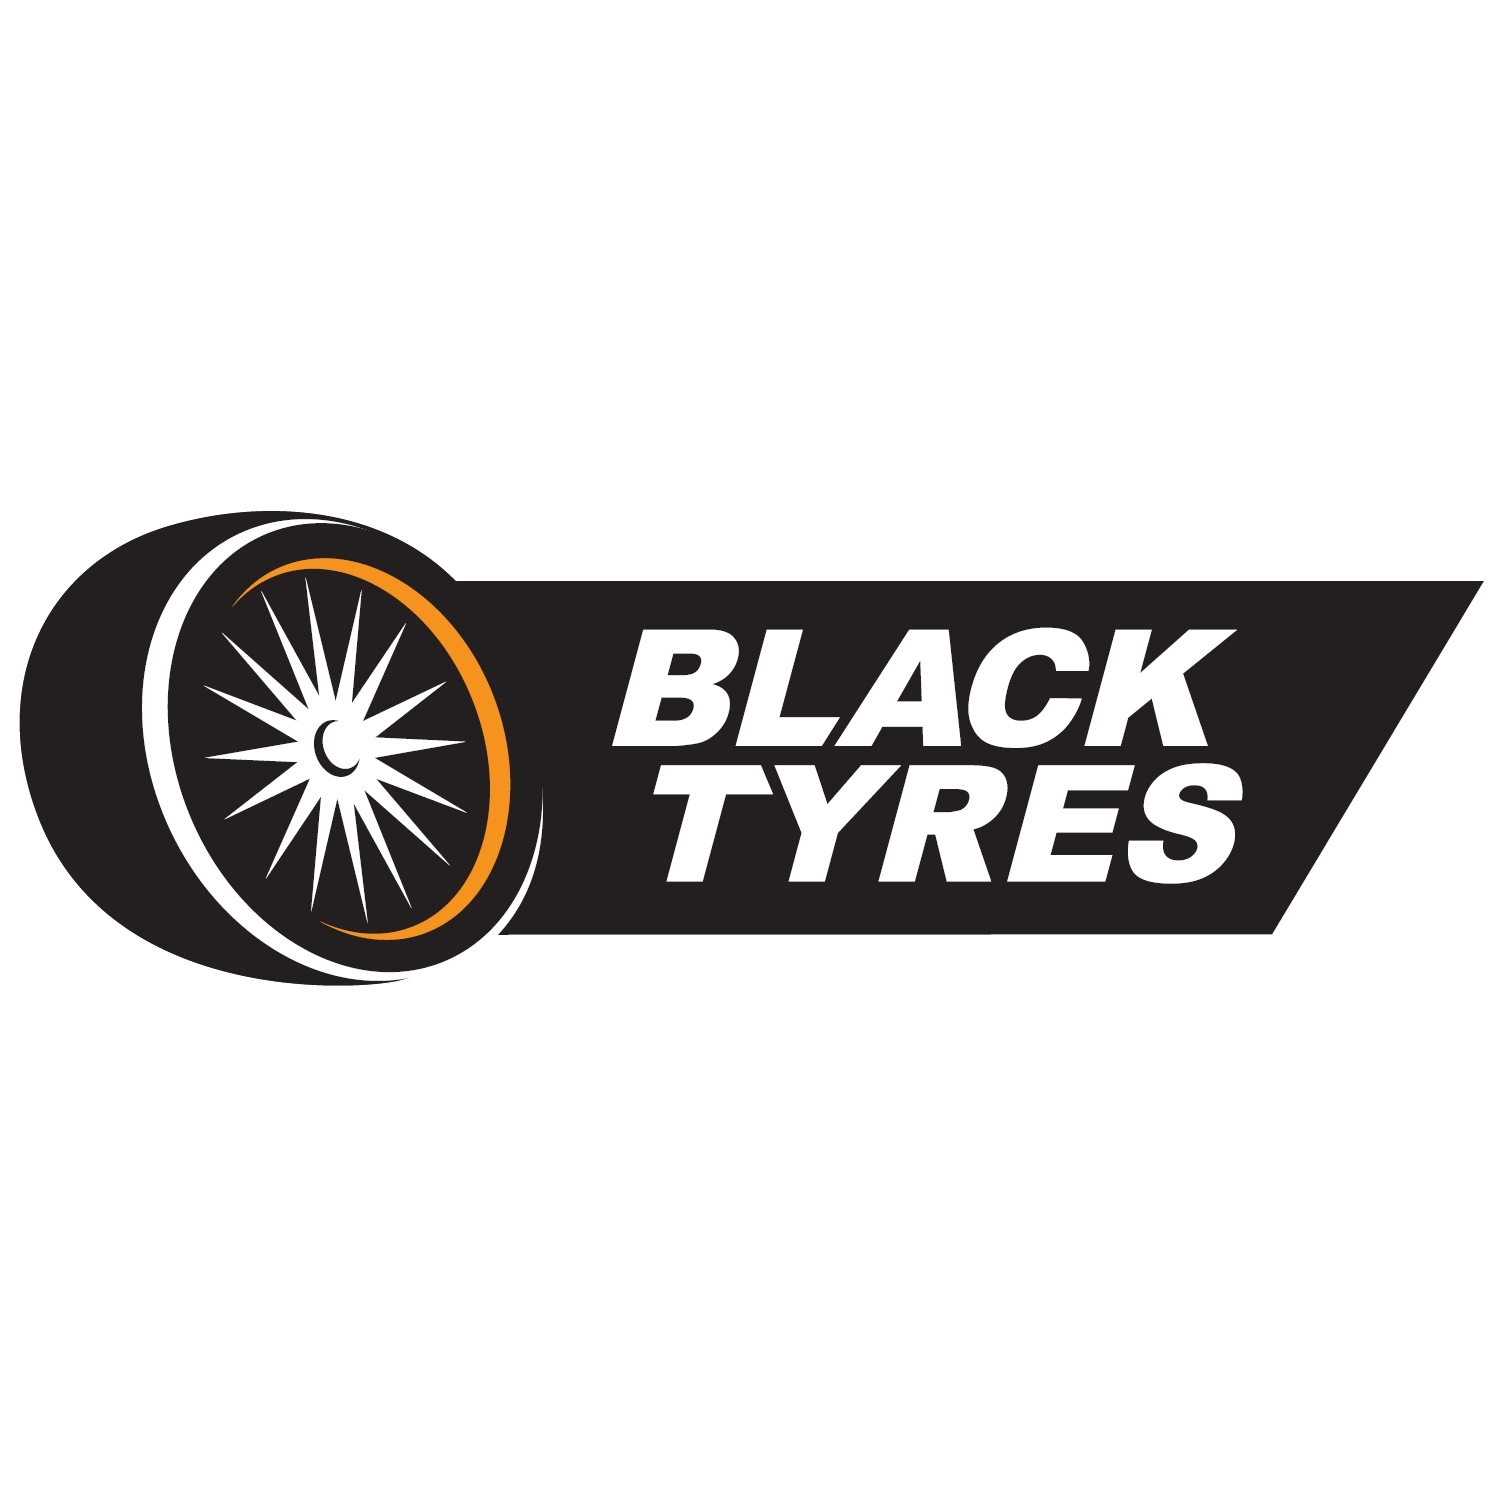 Www tyres ru. BLACKTYRES логотип. BLACKTYRES шины. Блэк Тайерс шины. Колесо ру логотип.